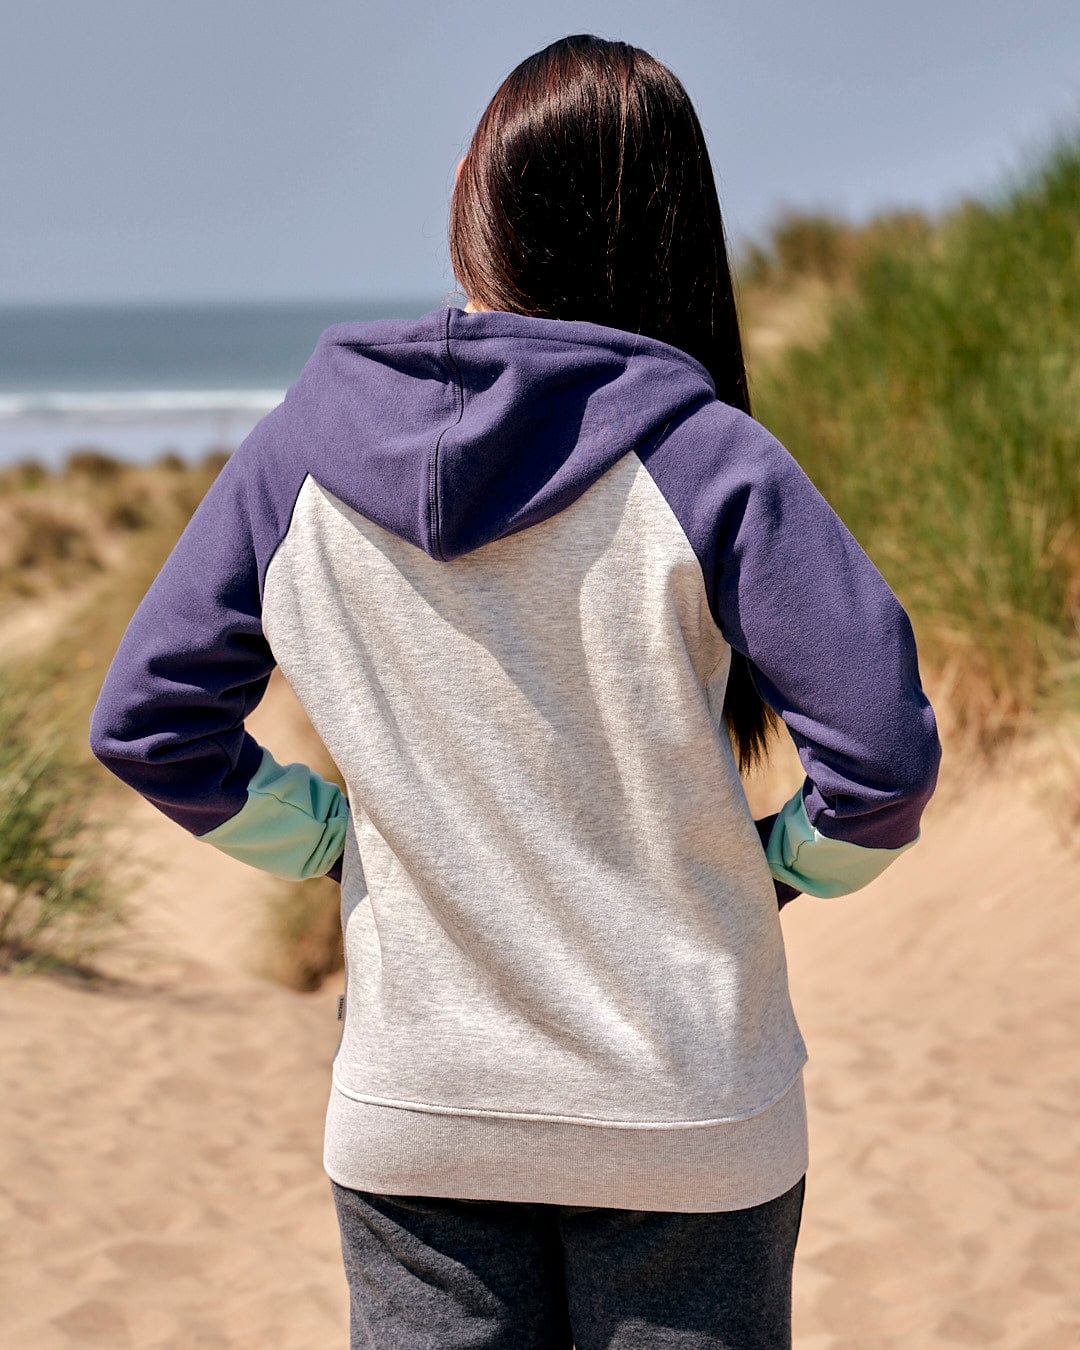 The Saltrock Jan - Womens Zip Hoodie - Grey effortlessly creates an iconic beach style, featuring the Saltrock branding.